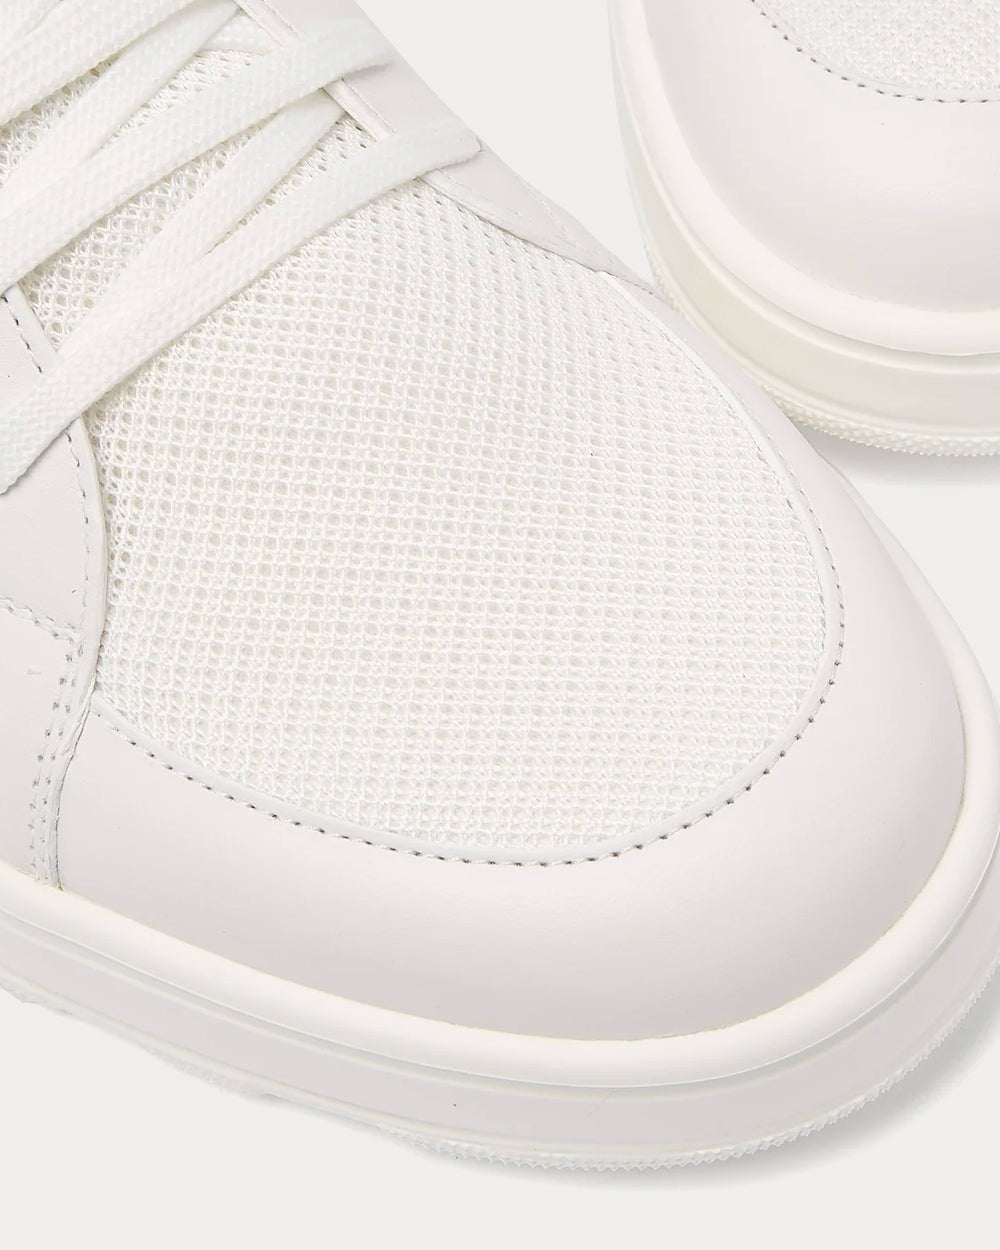 Fendi - FF Jacquard White High Top Sneakers